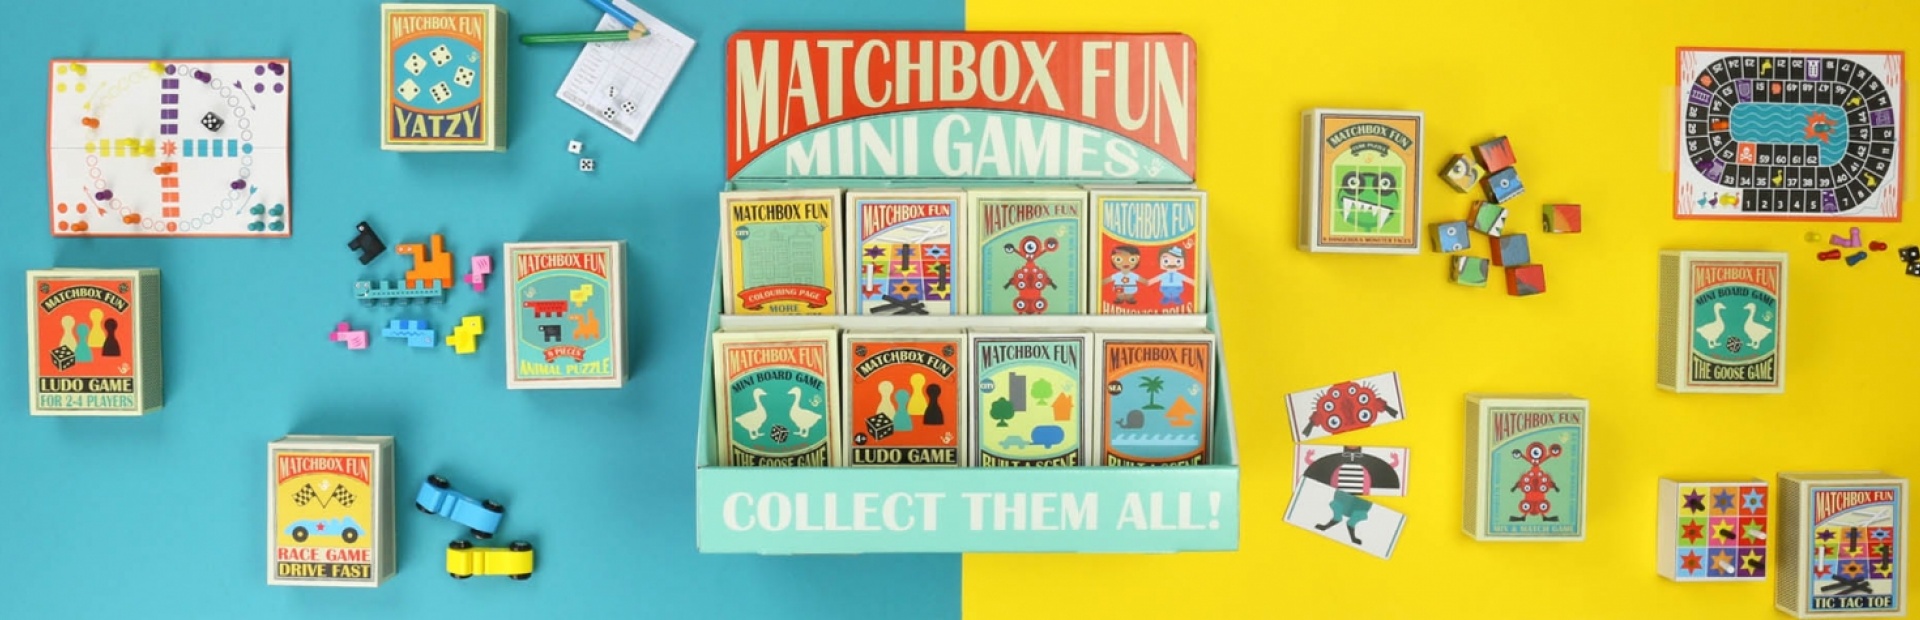 Matchbox fun!